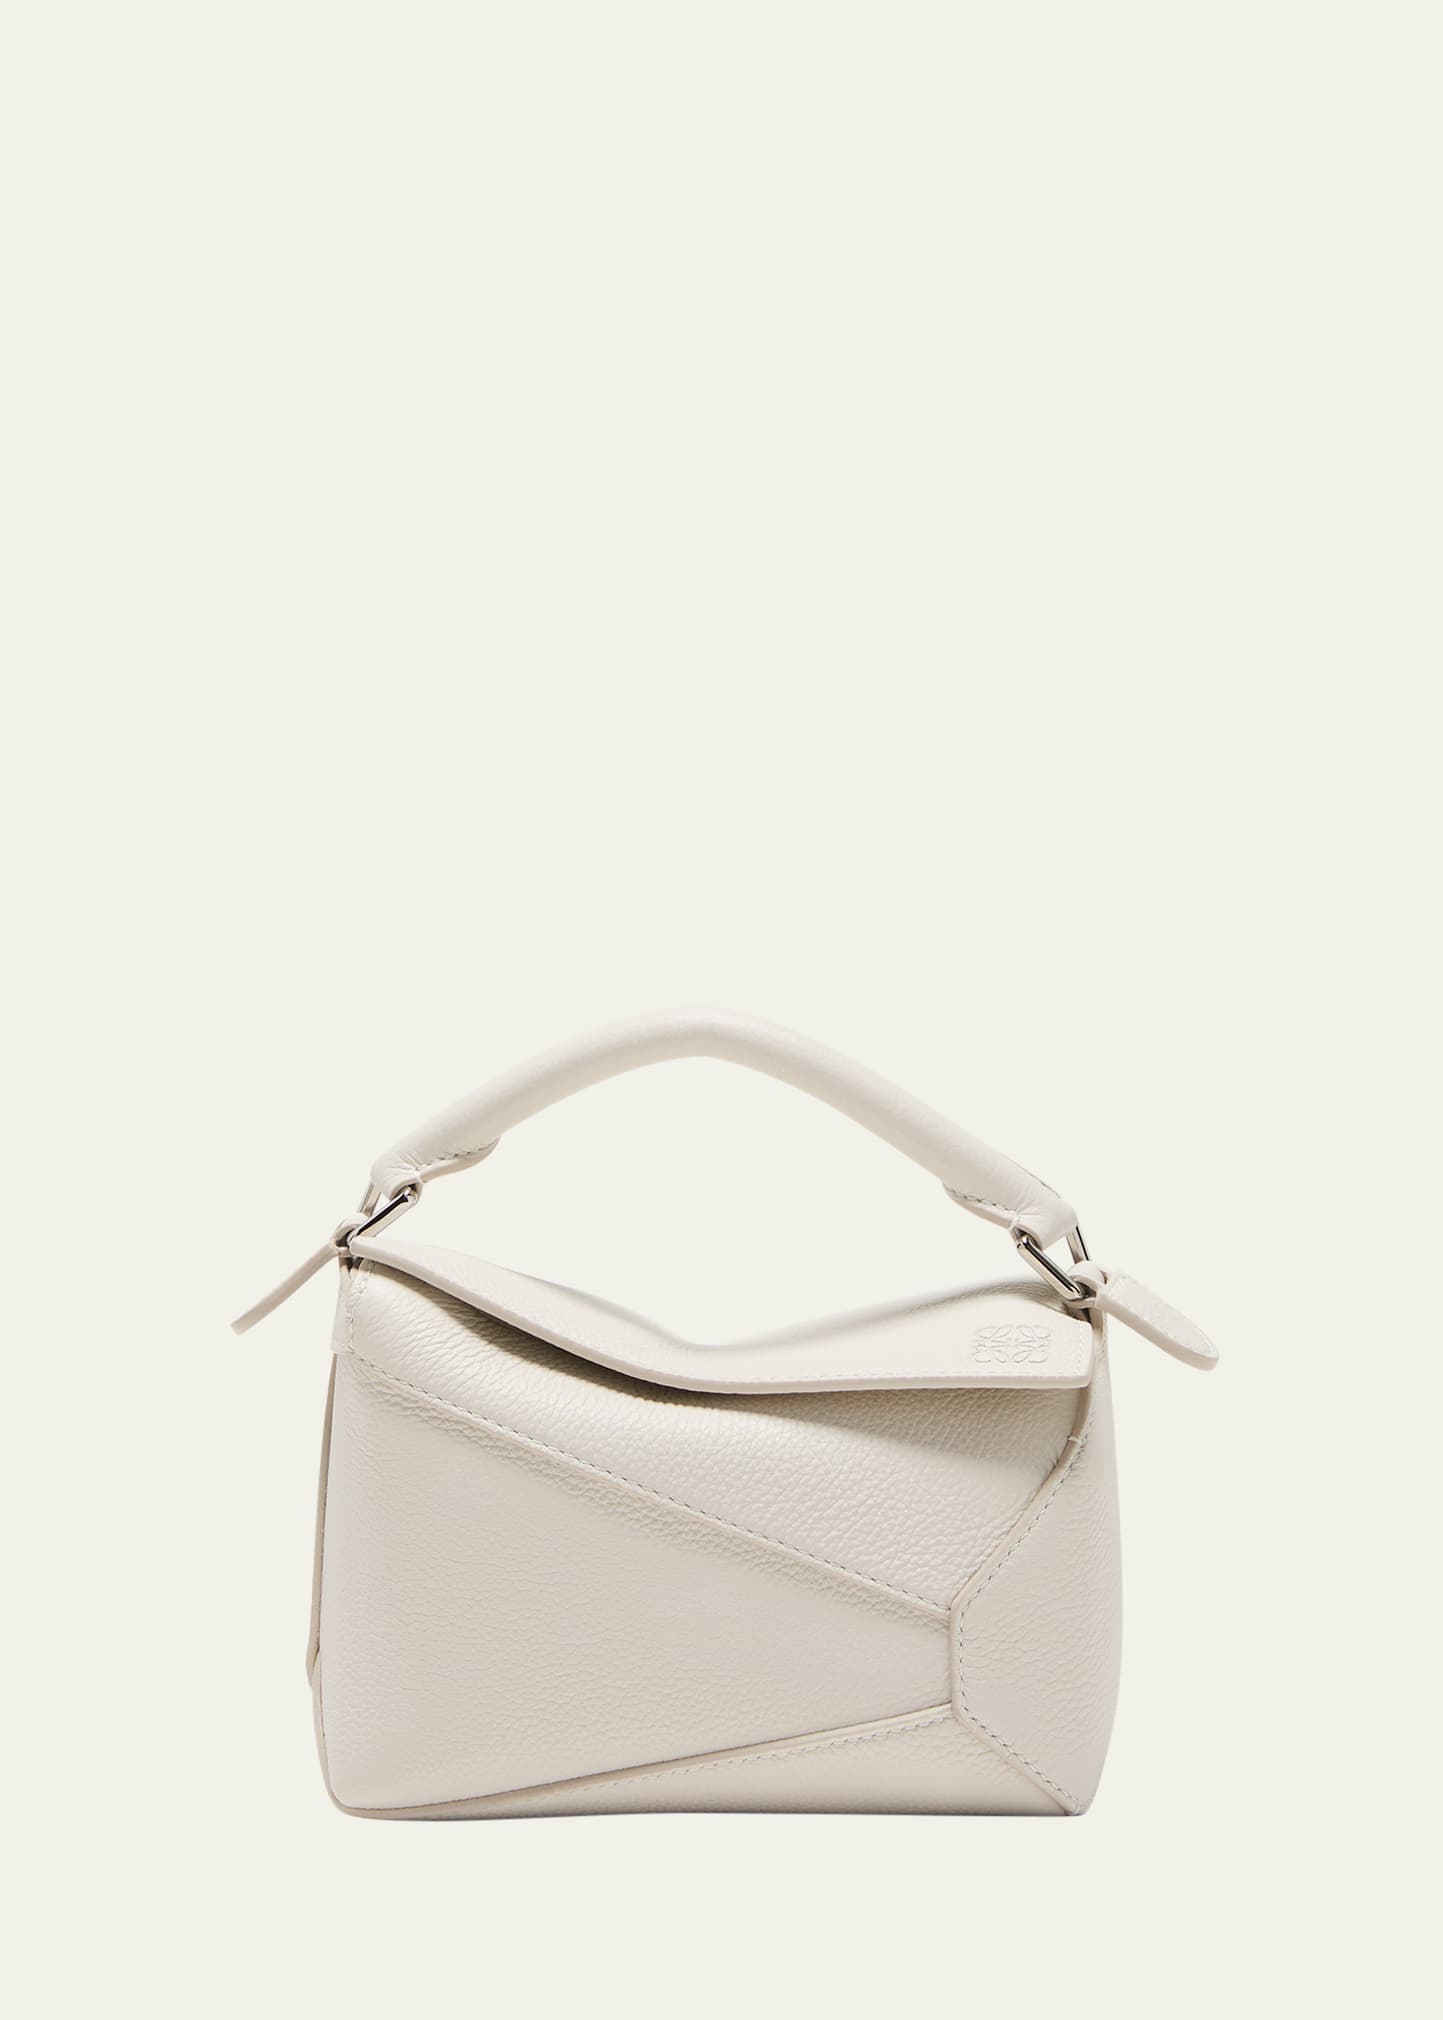 Loewe Women's Mini Puzzle Edge Leather Shoulder Bag - Soft White